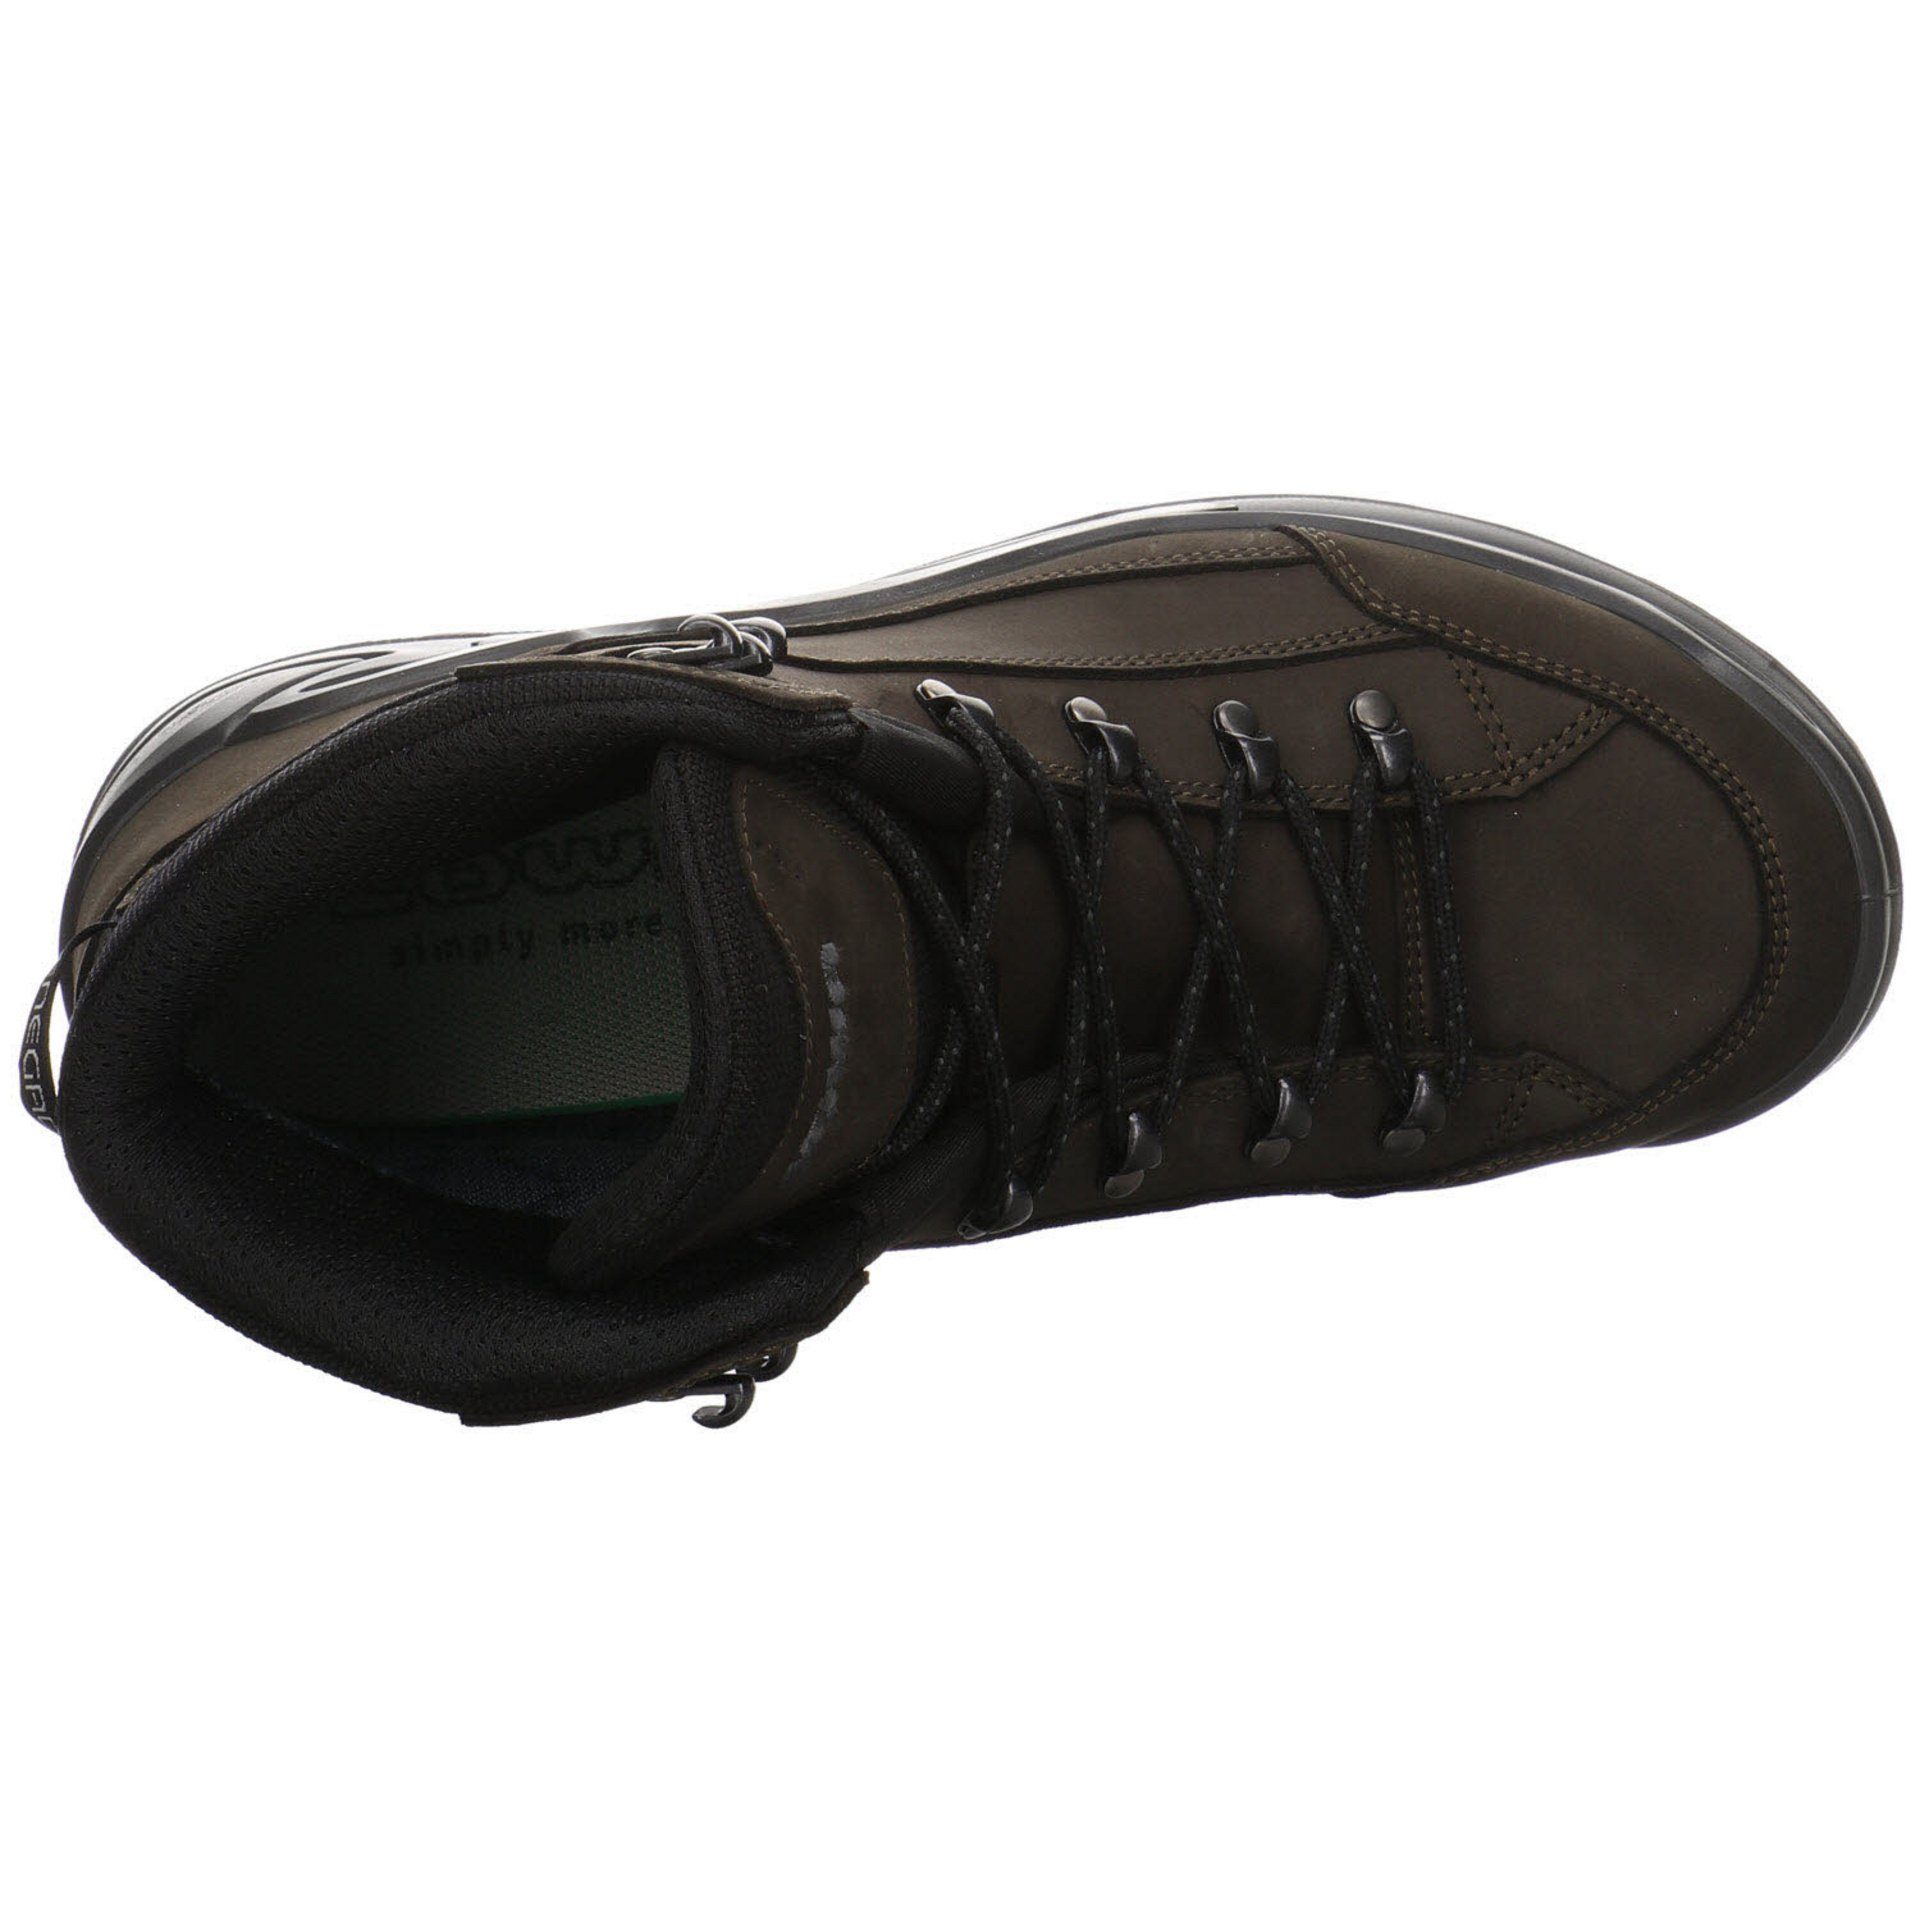 Lowa Herren Renegade Schuhe mid Outdoorschuh Outdoor GTX Leder-/Textilkombination Wanderschuh dunkelbraun/schwarz